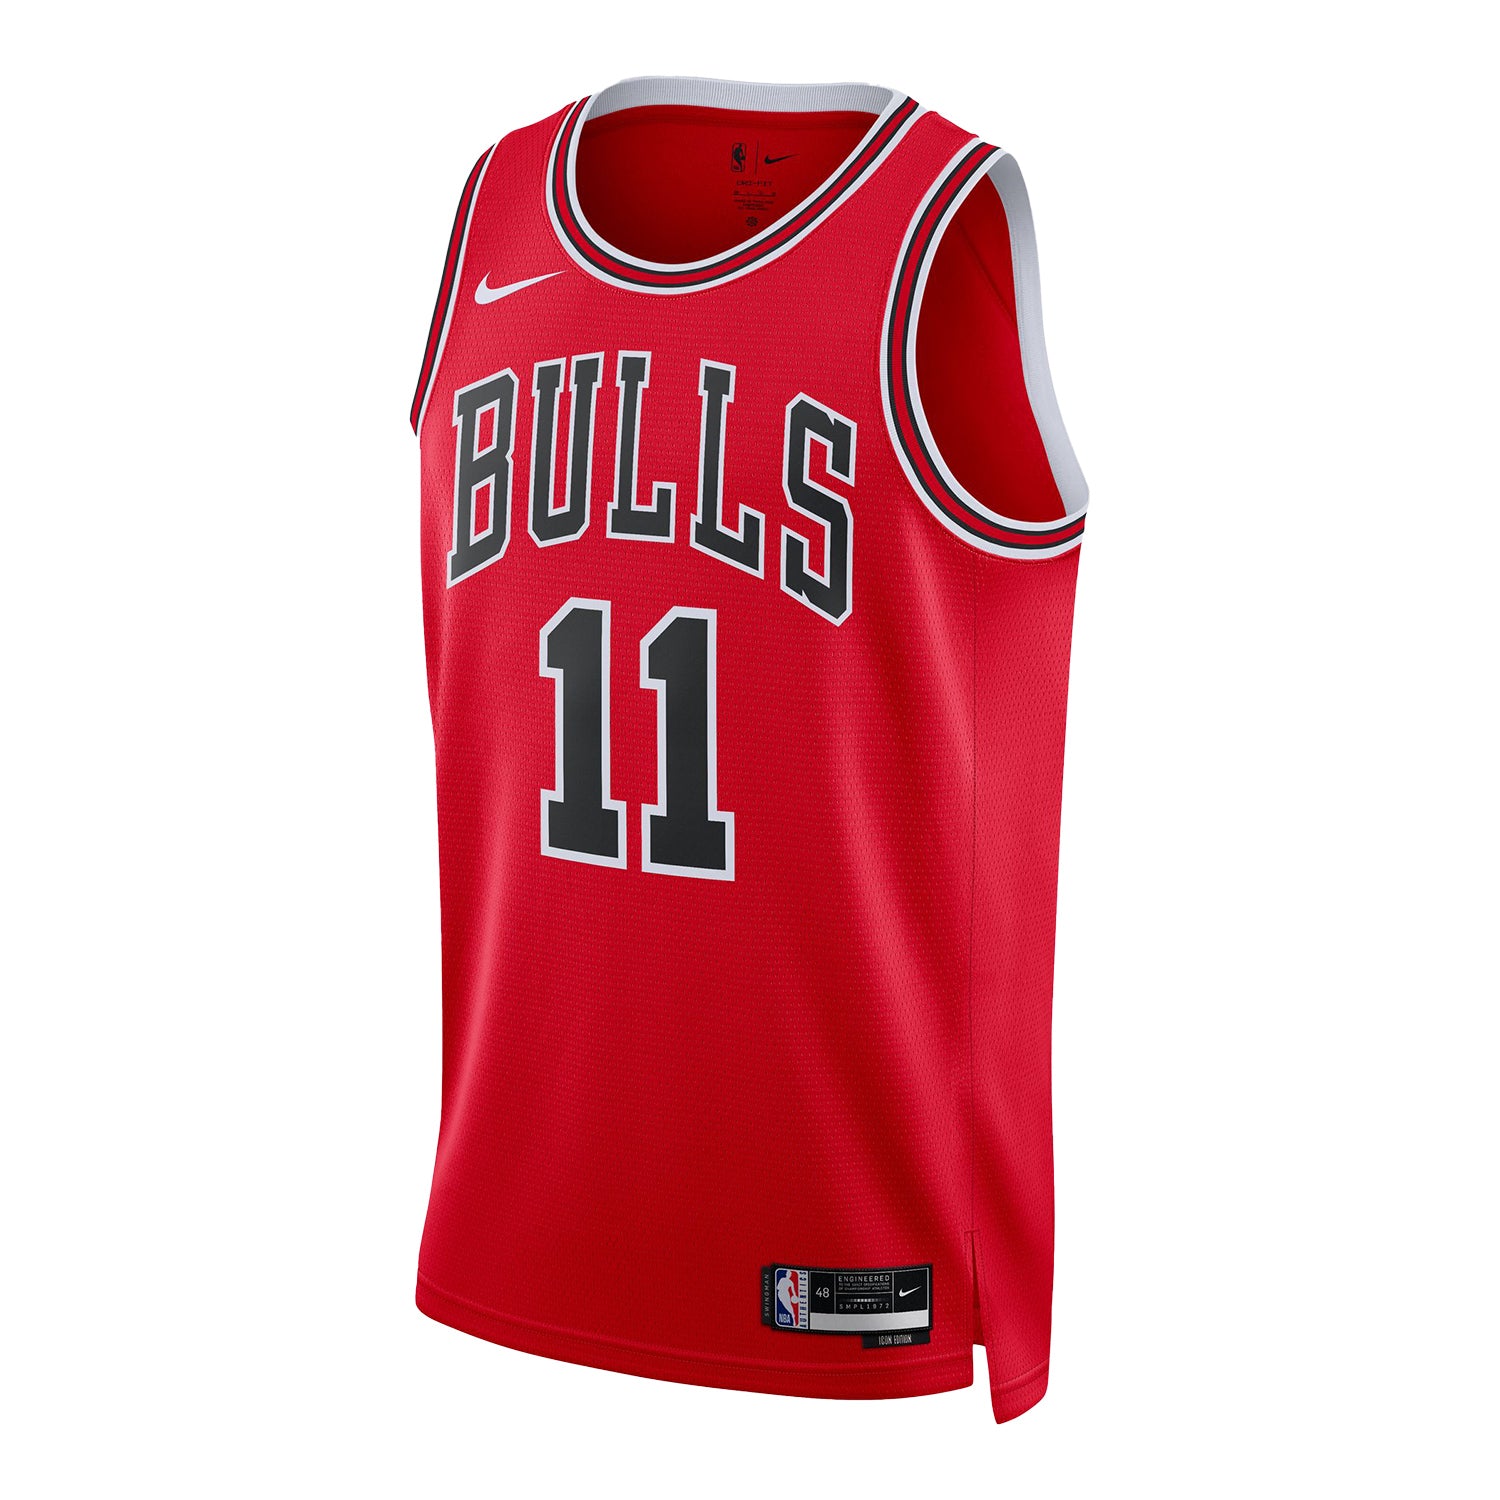 CHICAGO BULLS NBA Training Shirt Jersey Adidas Size S 